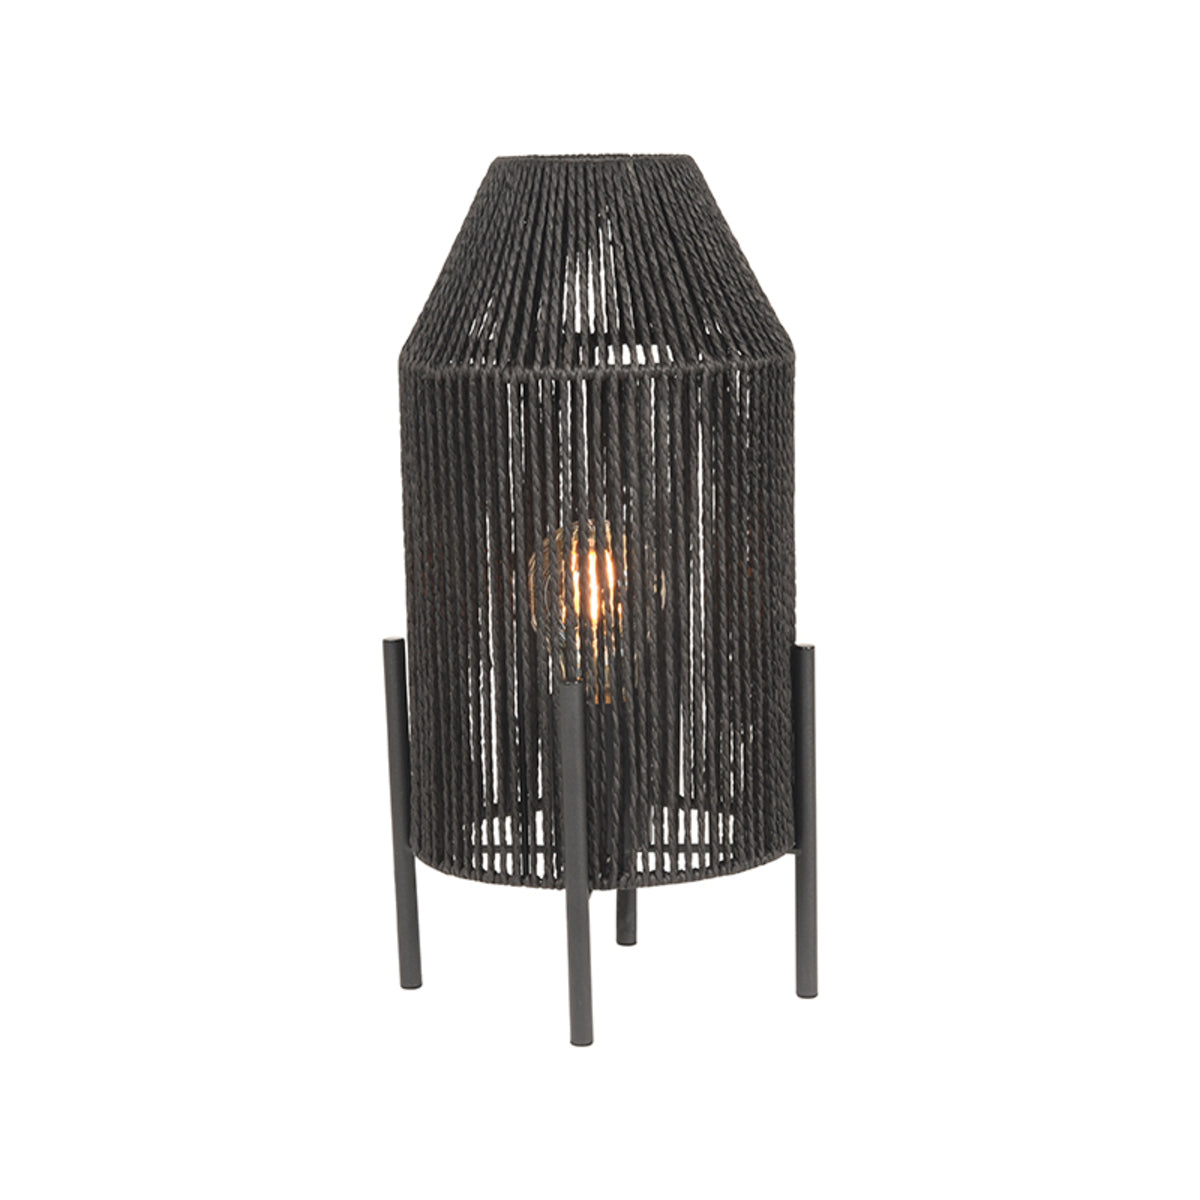 LABEL51 Table lamp Ibiza - Black - Jute